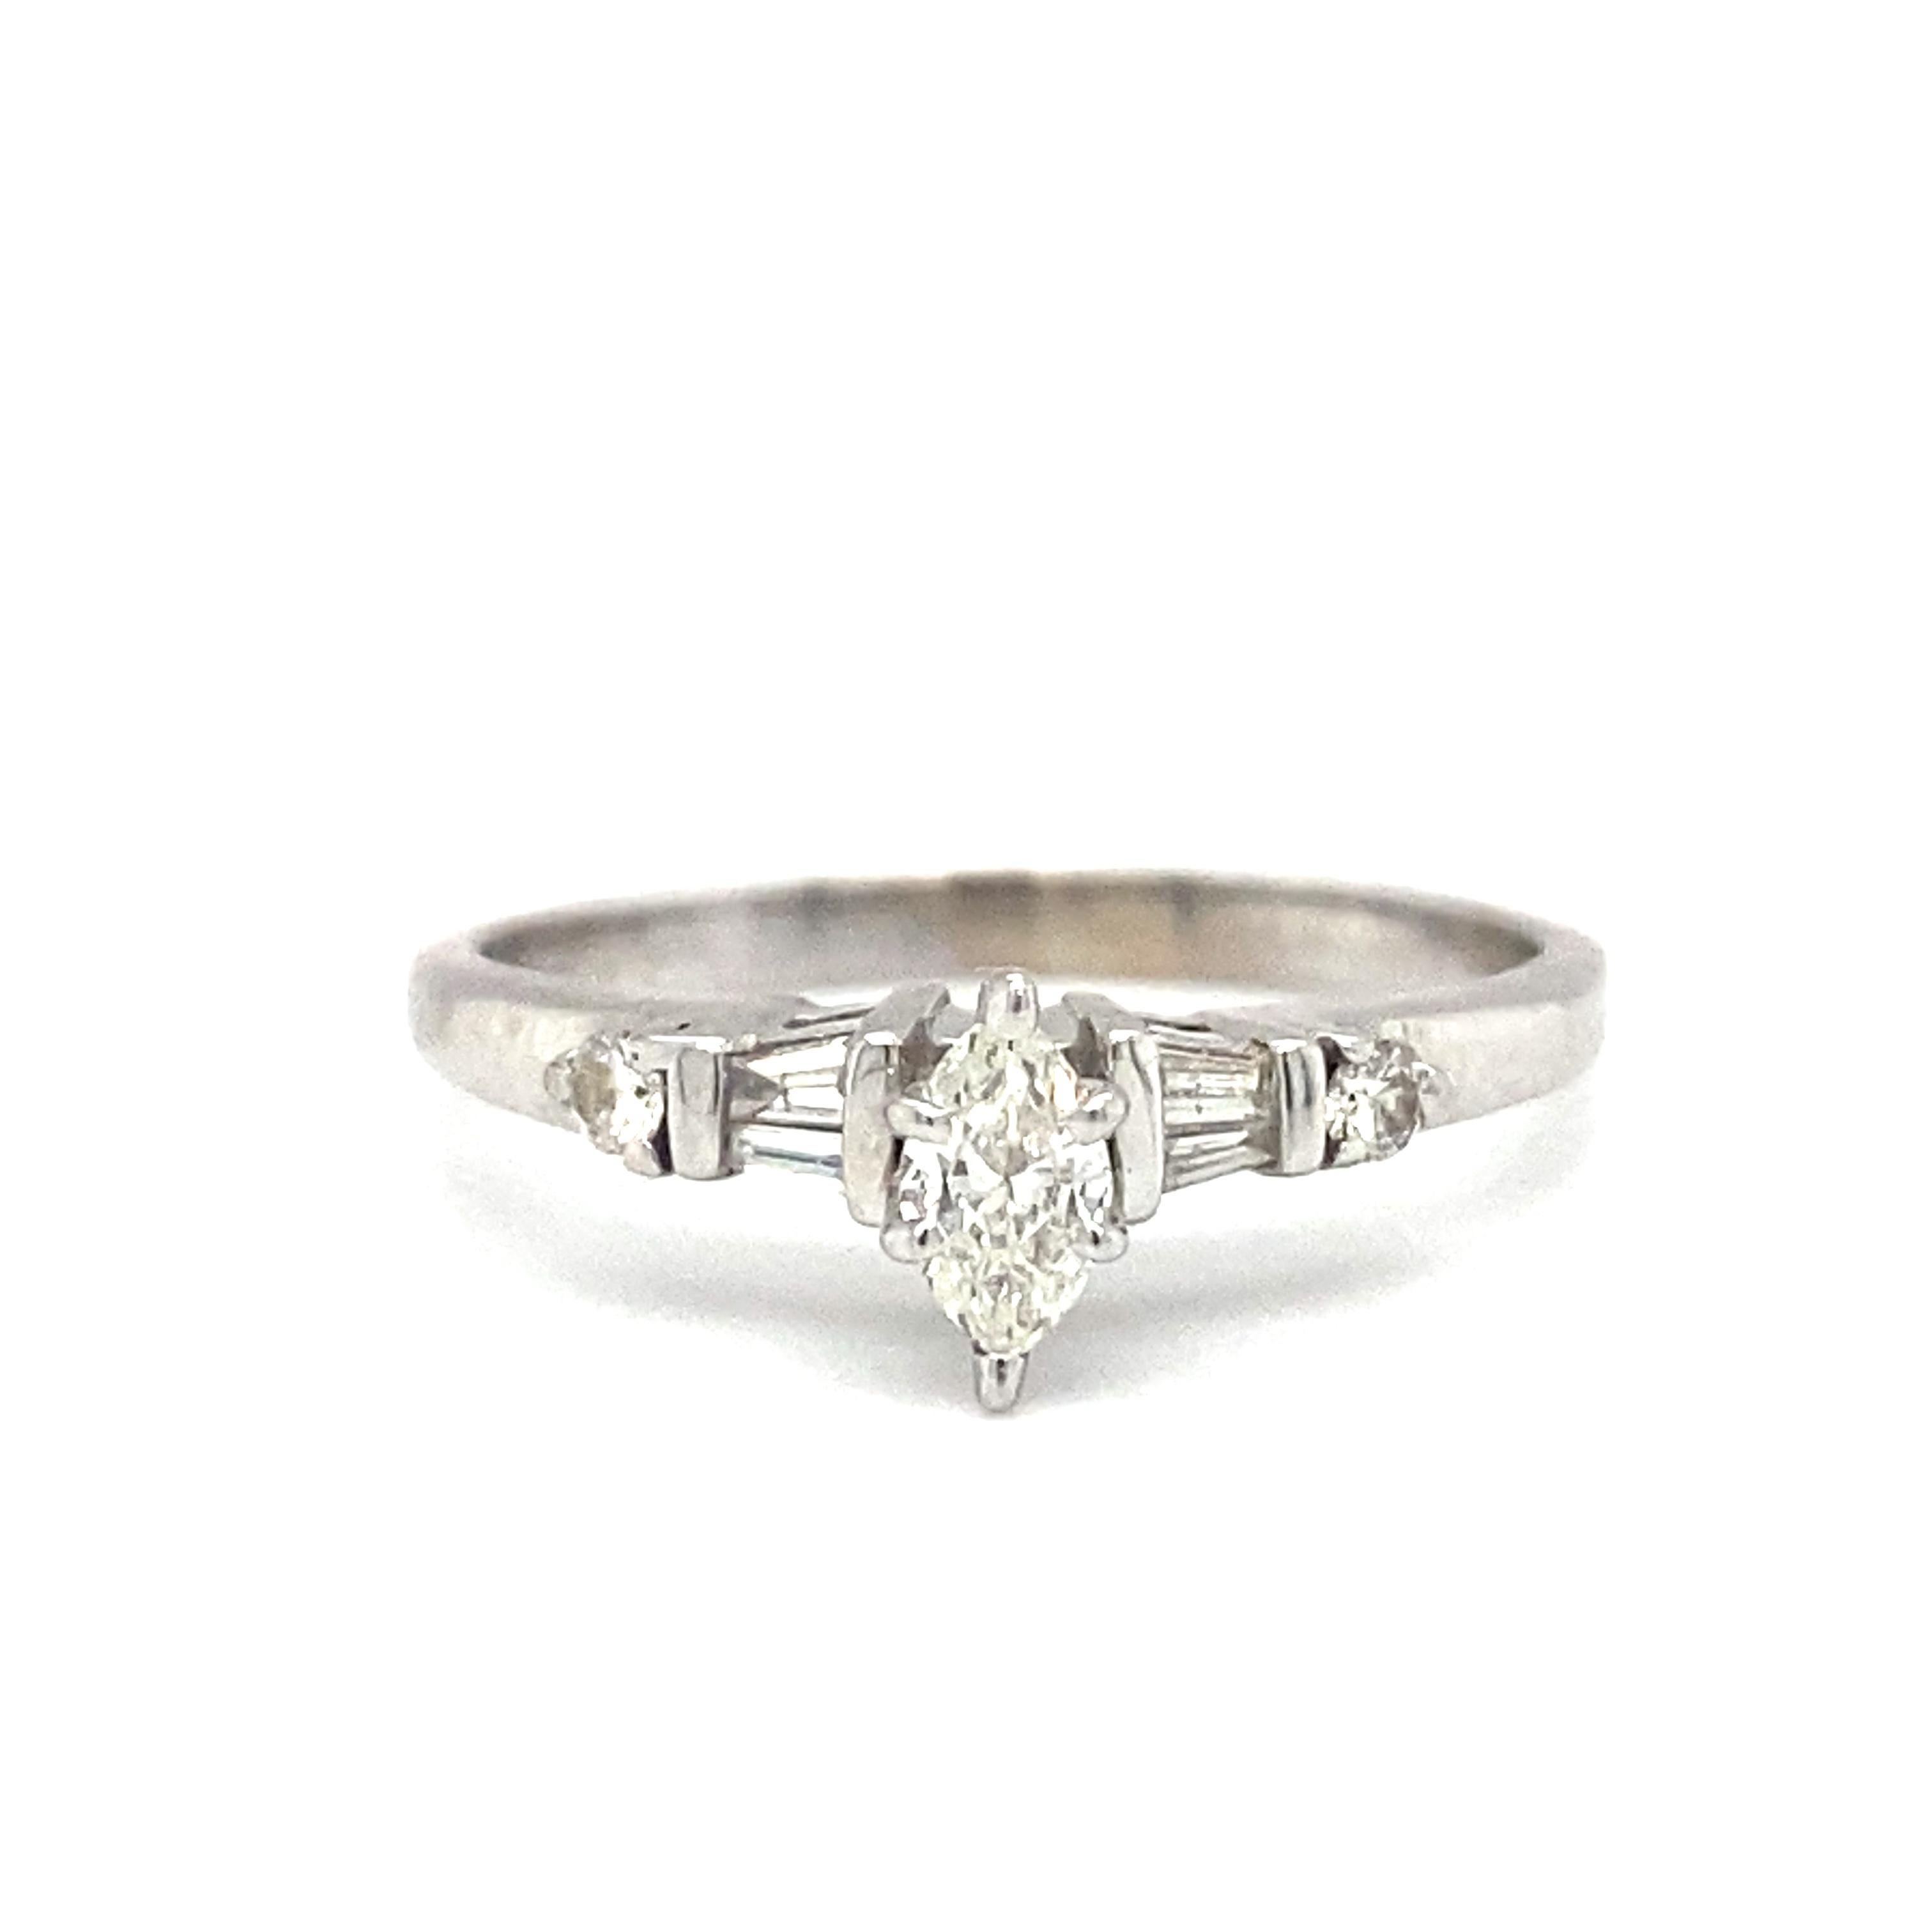 .25 carat marquise diamond ring